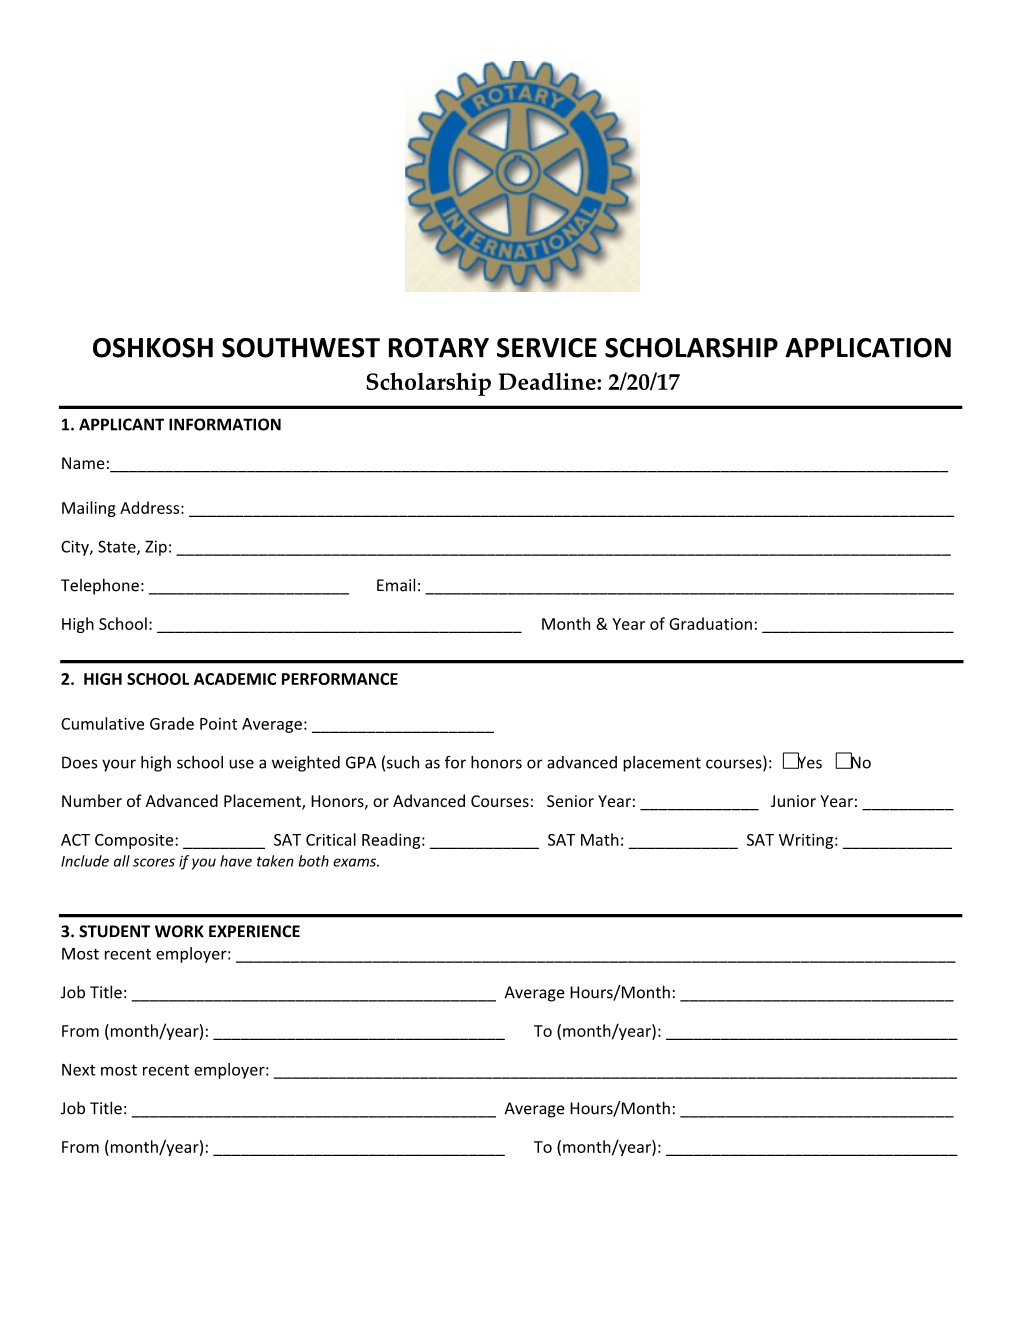 Oshkosh Southwest Rotary Service Scholarship Application